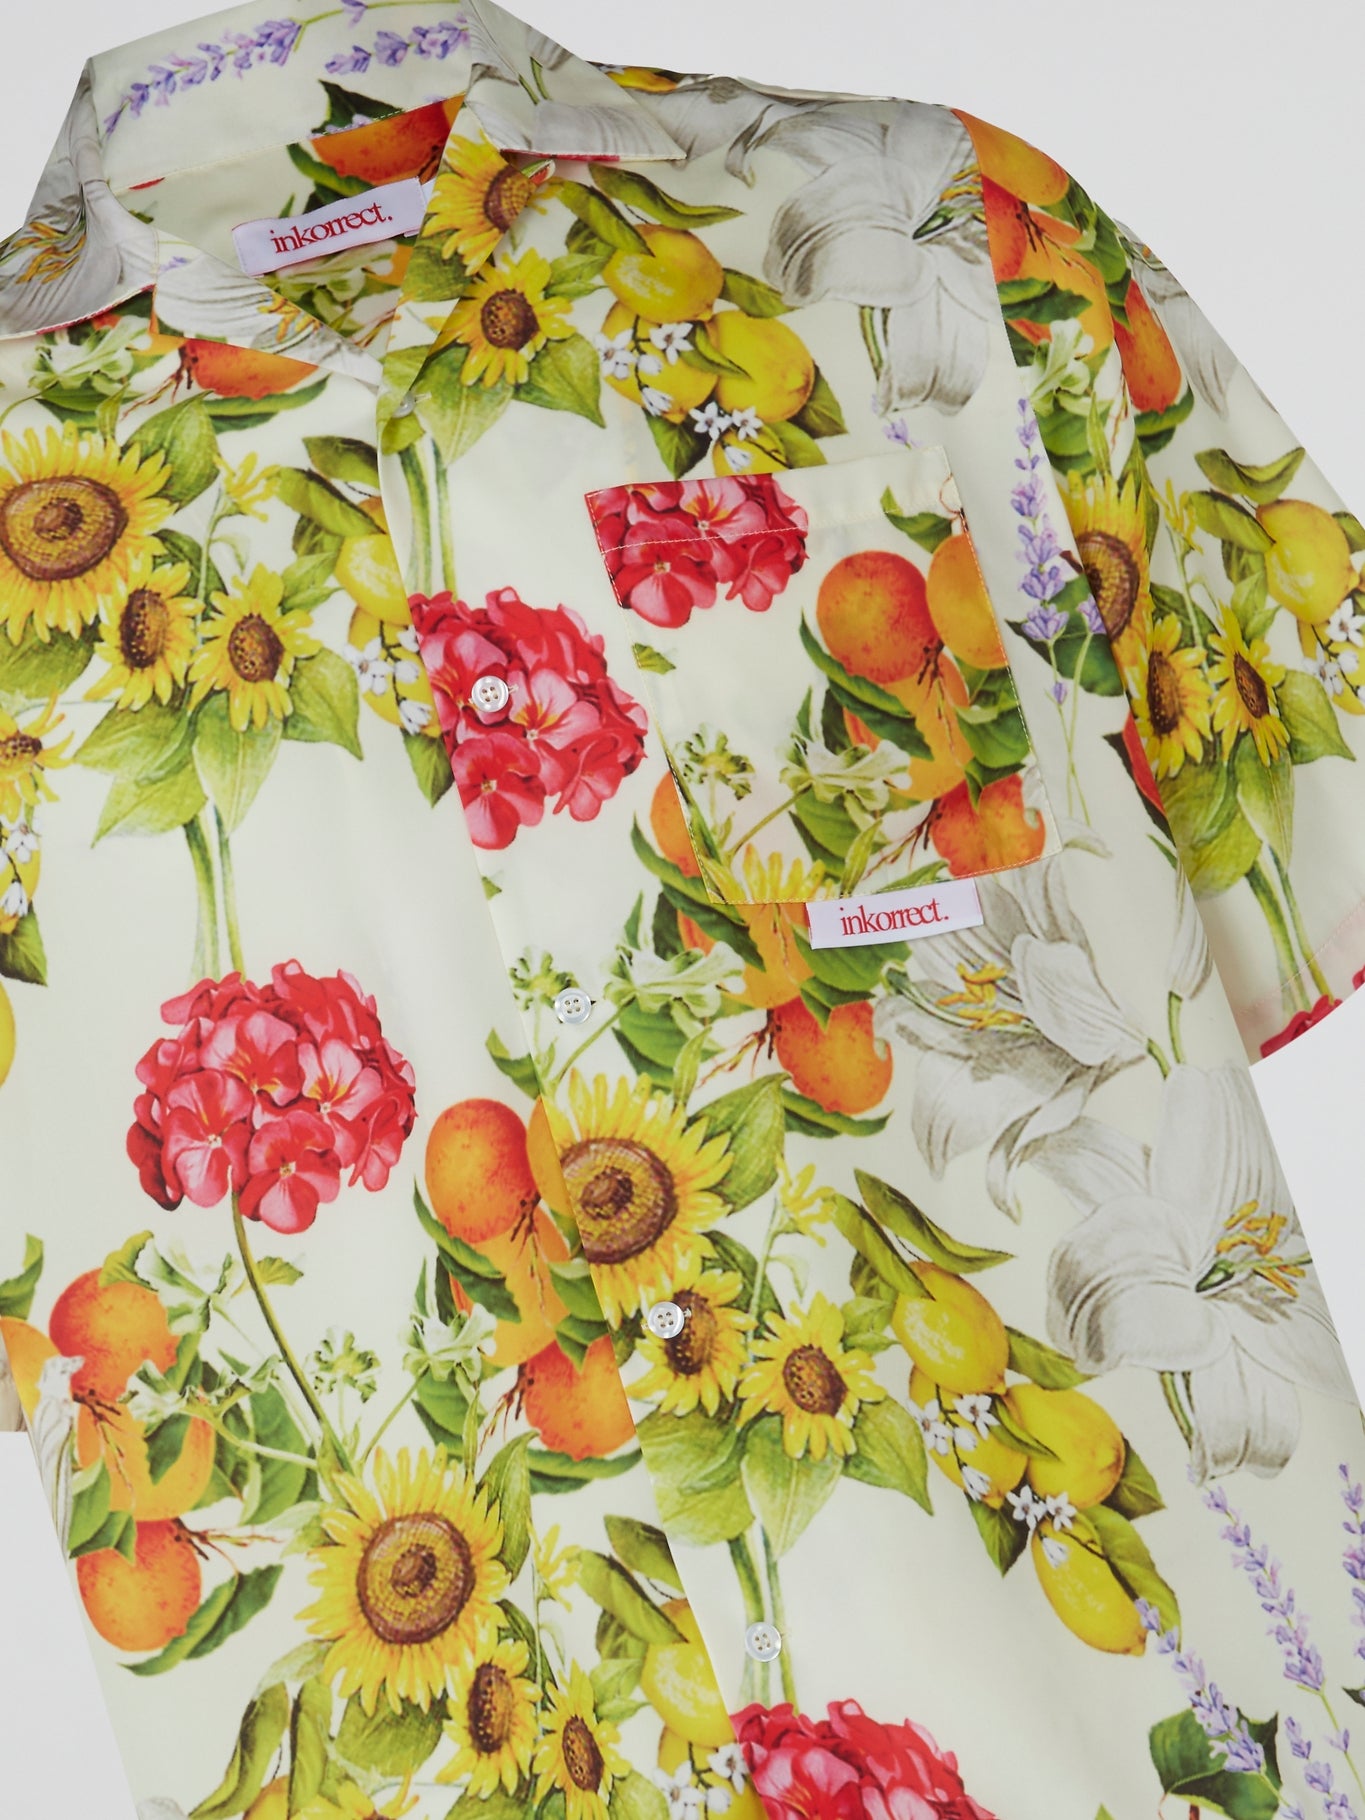 Floral Print Bowling Shirt